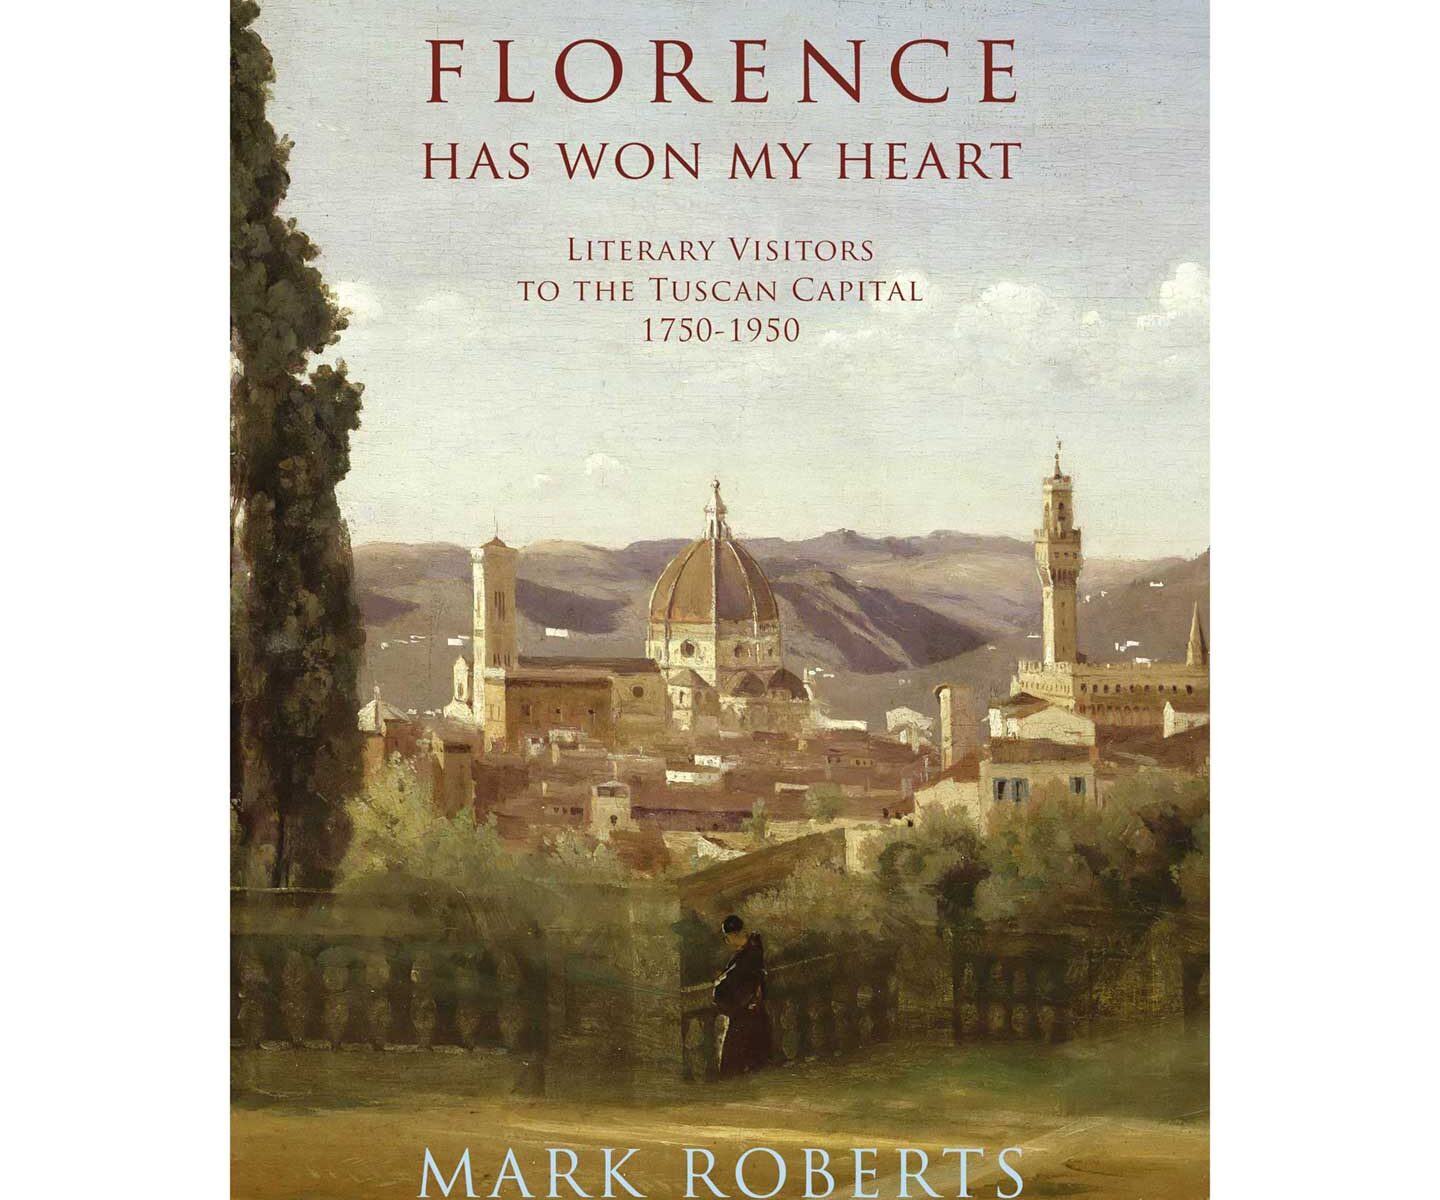 Florence has won my heart